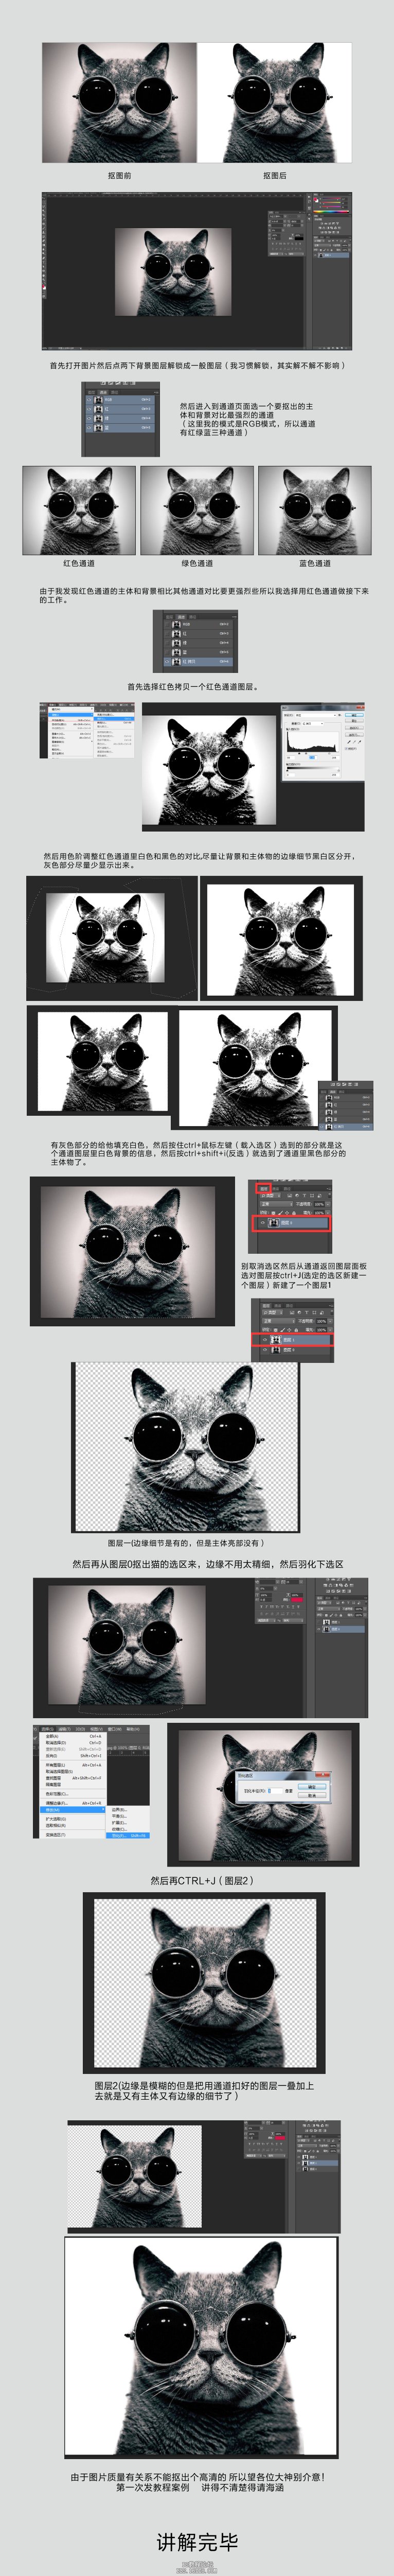 CC通道抠图：利用通道抠出眼镜猫图片。